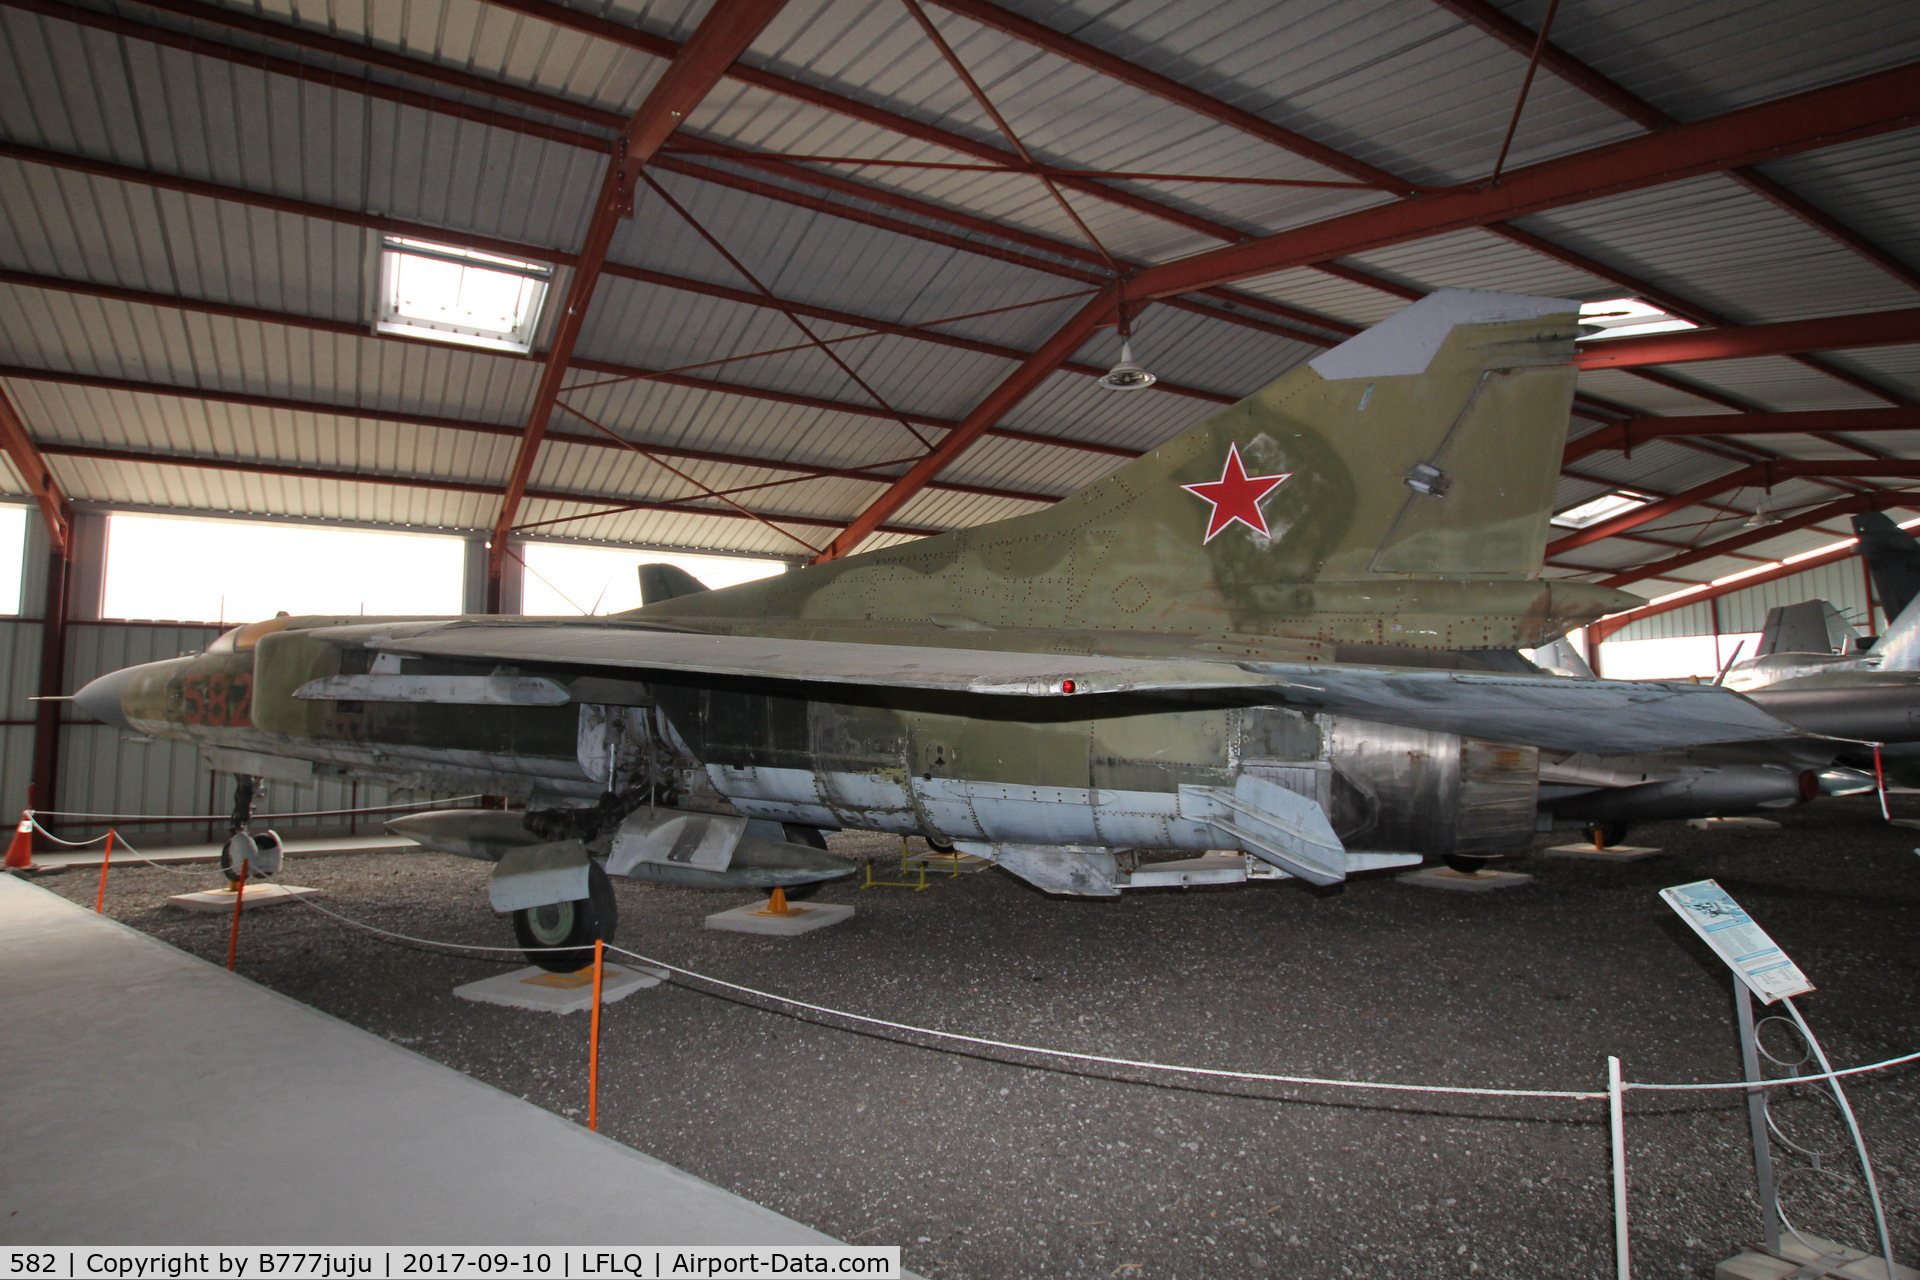 582, 1973 Mikoyan-Gurevich MiG-23MF C/N 039021, on display